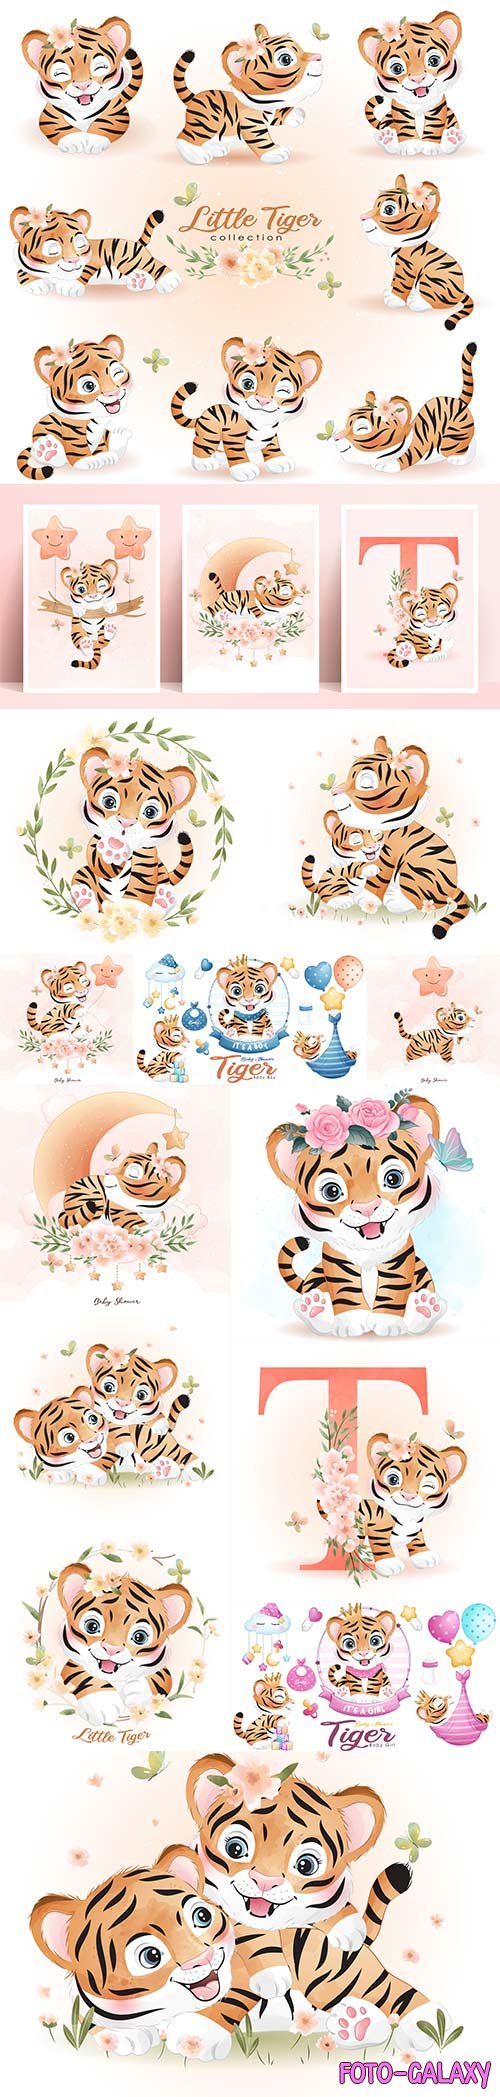 Cute doodle tiger with watercolor illustration set premium vector